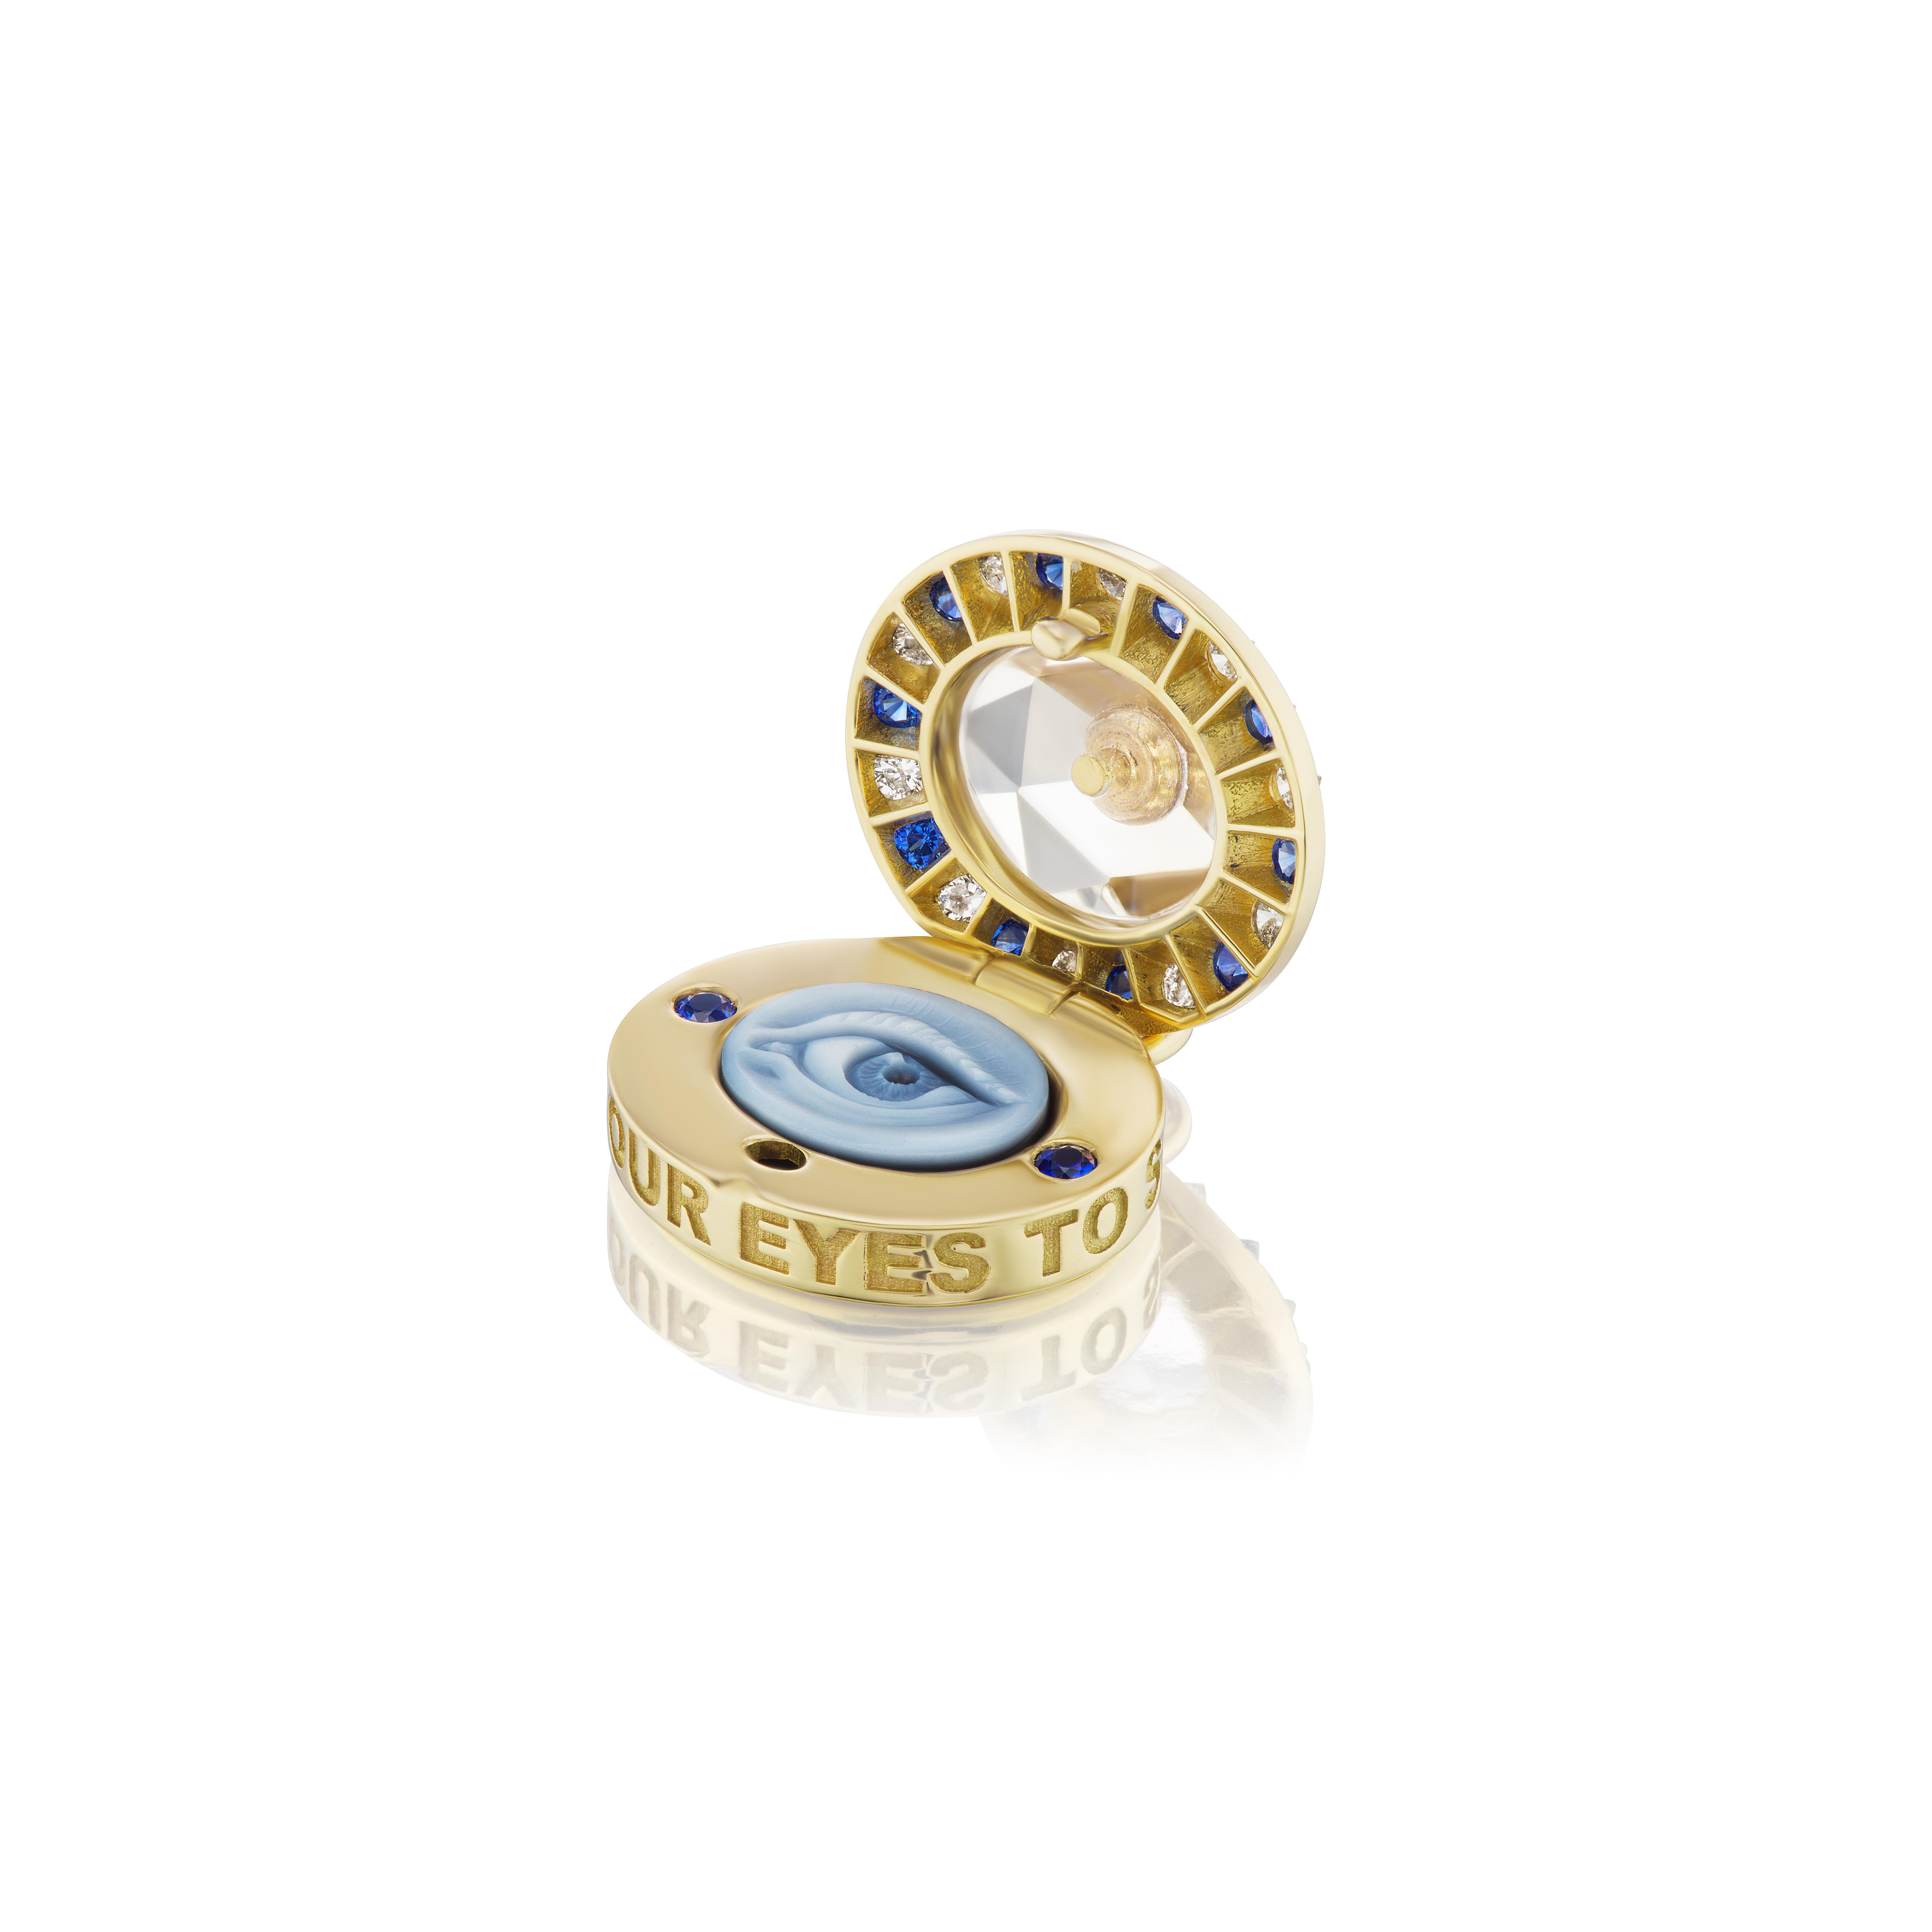 Contemporary AnaKatarina Customizable Agate, Gold, Sapphire, Diamond Eye Love Locket Pendant